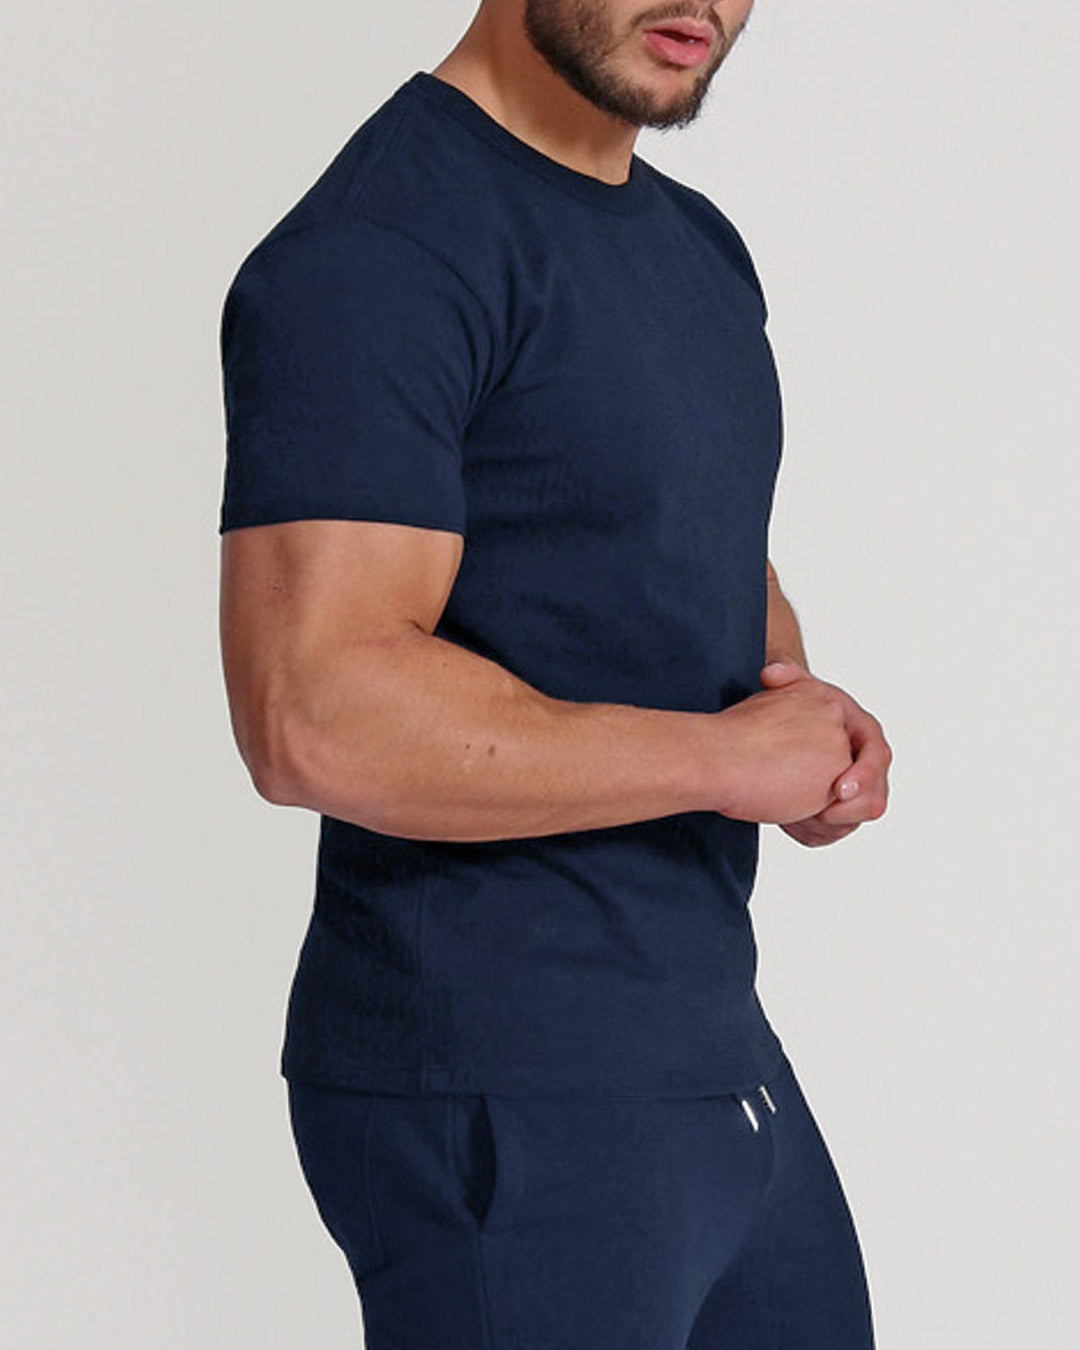 Crew Basic Muscle Fitted Premium Heavyweight Plain T-Shirt - Navy